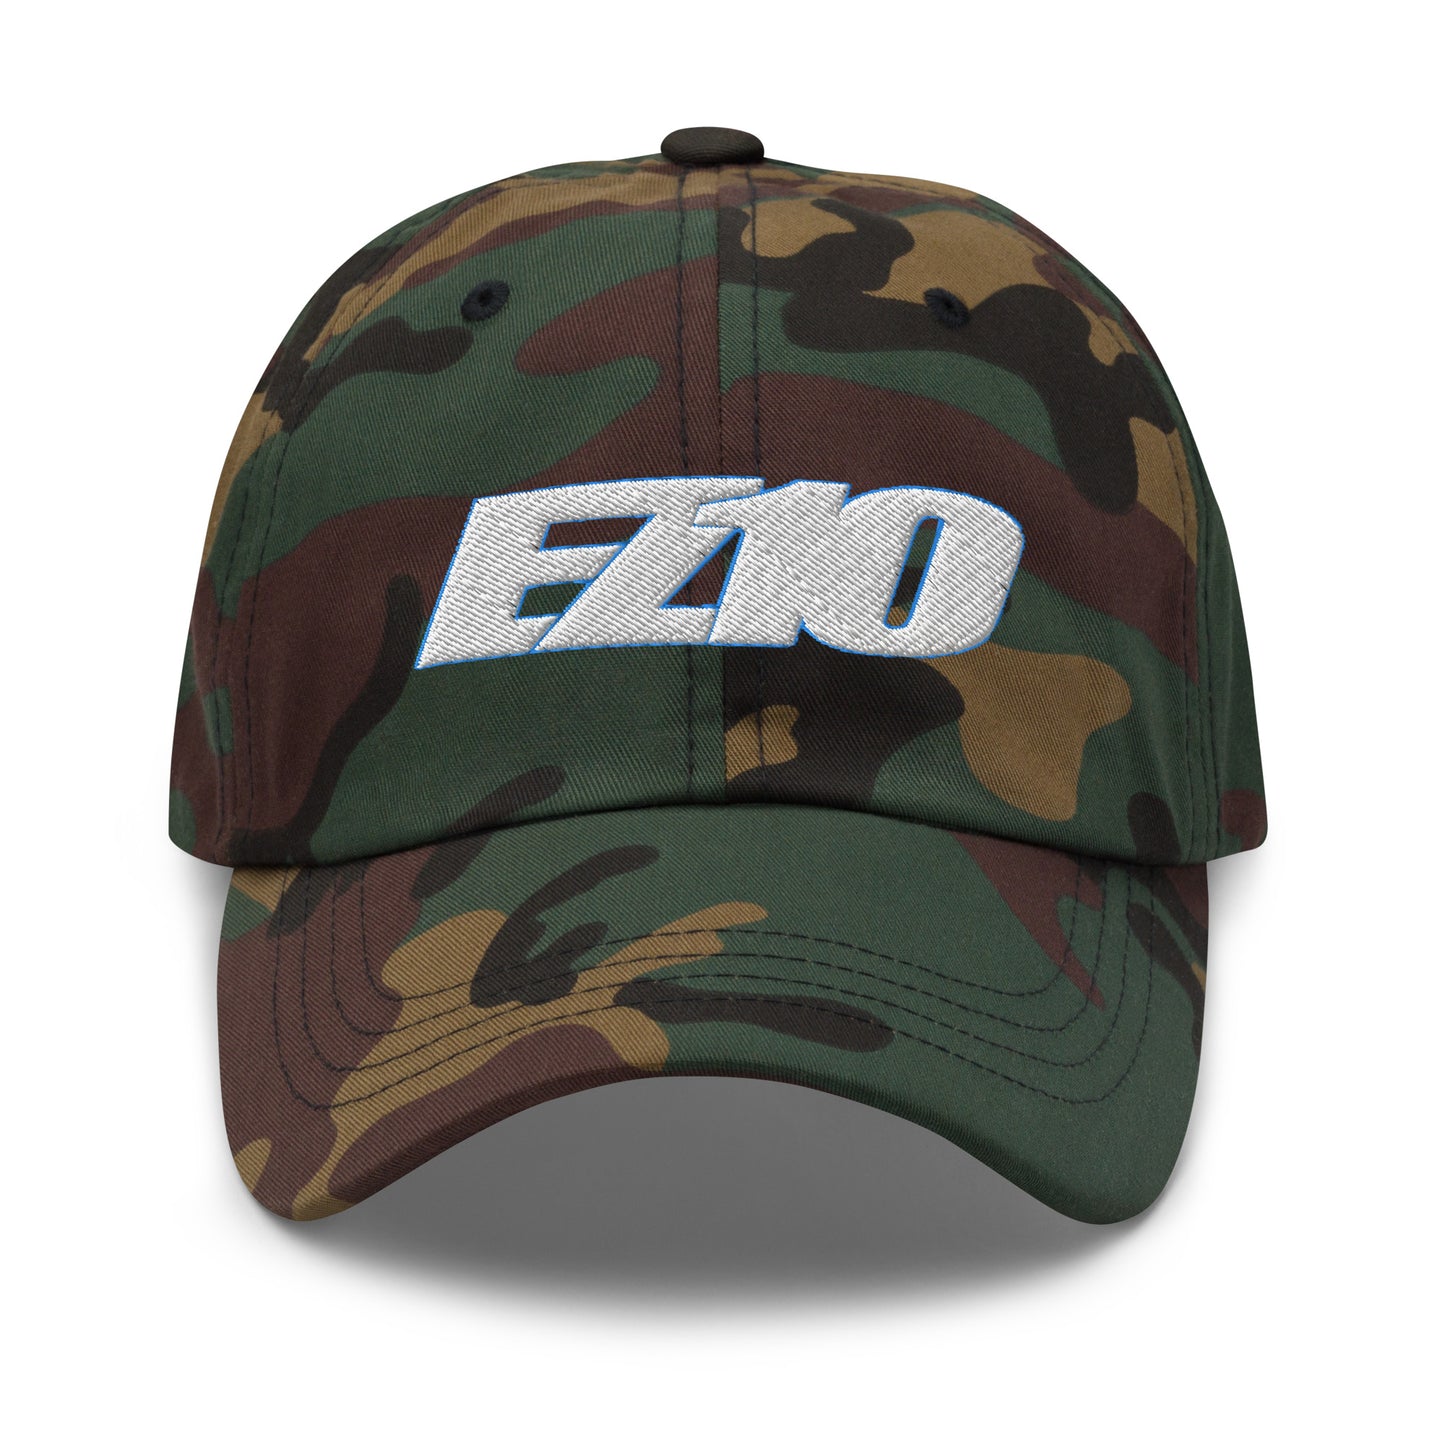 EZ10 "Dad hat"